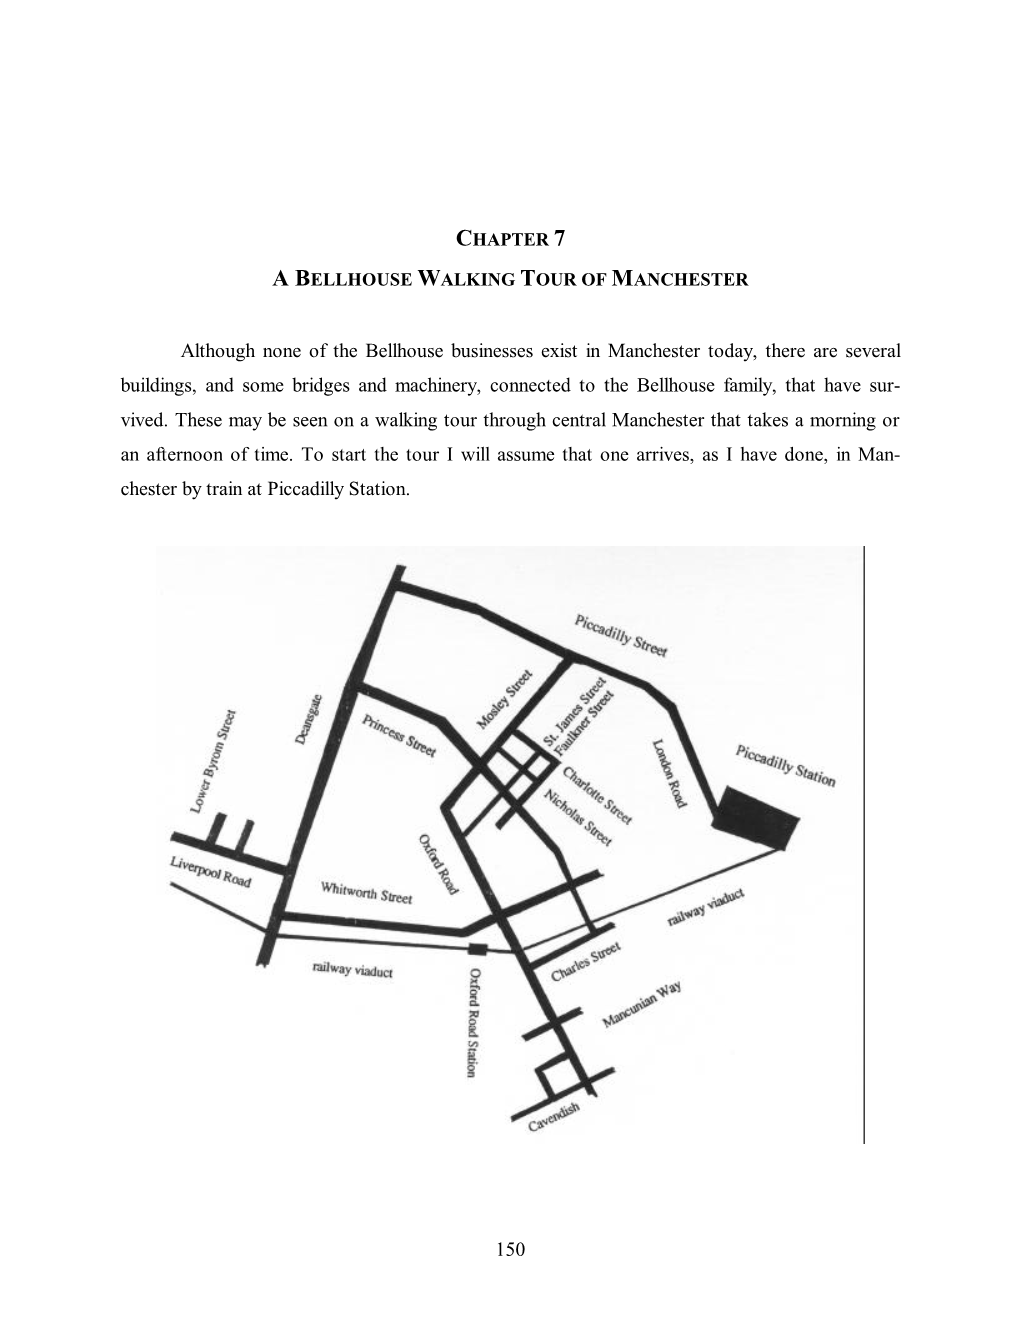 Chapter 7: a Bellhouse Walking Tour of Manchester